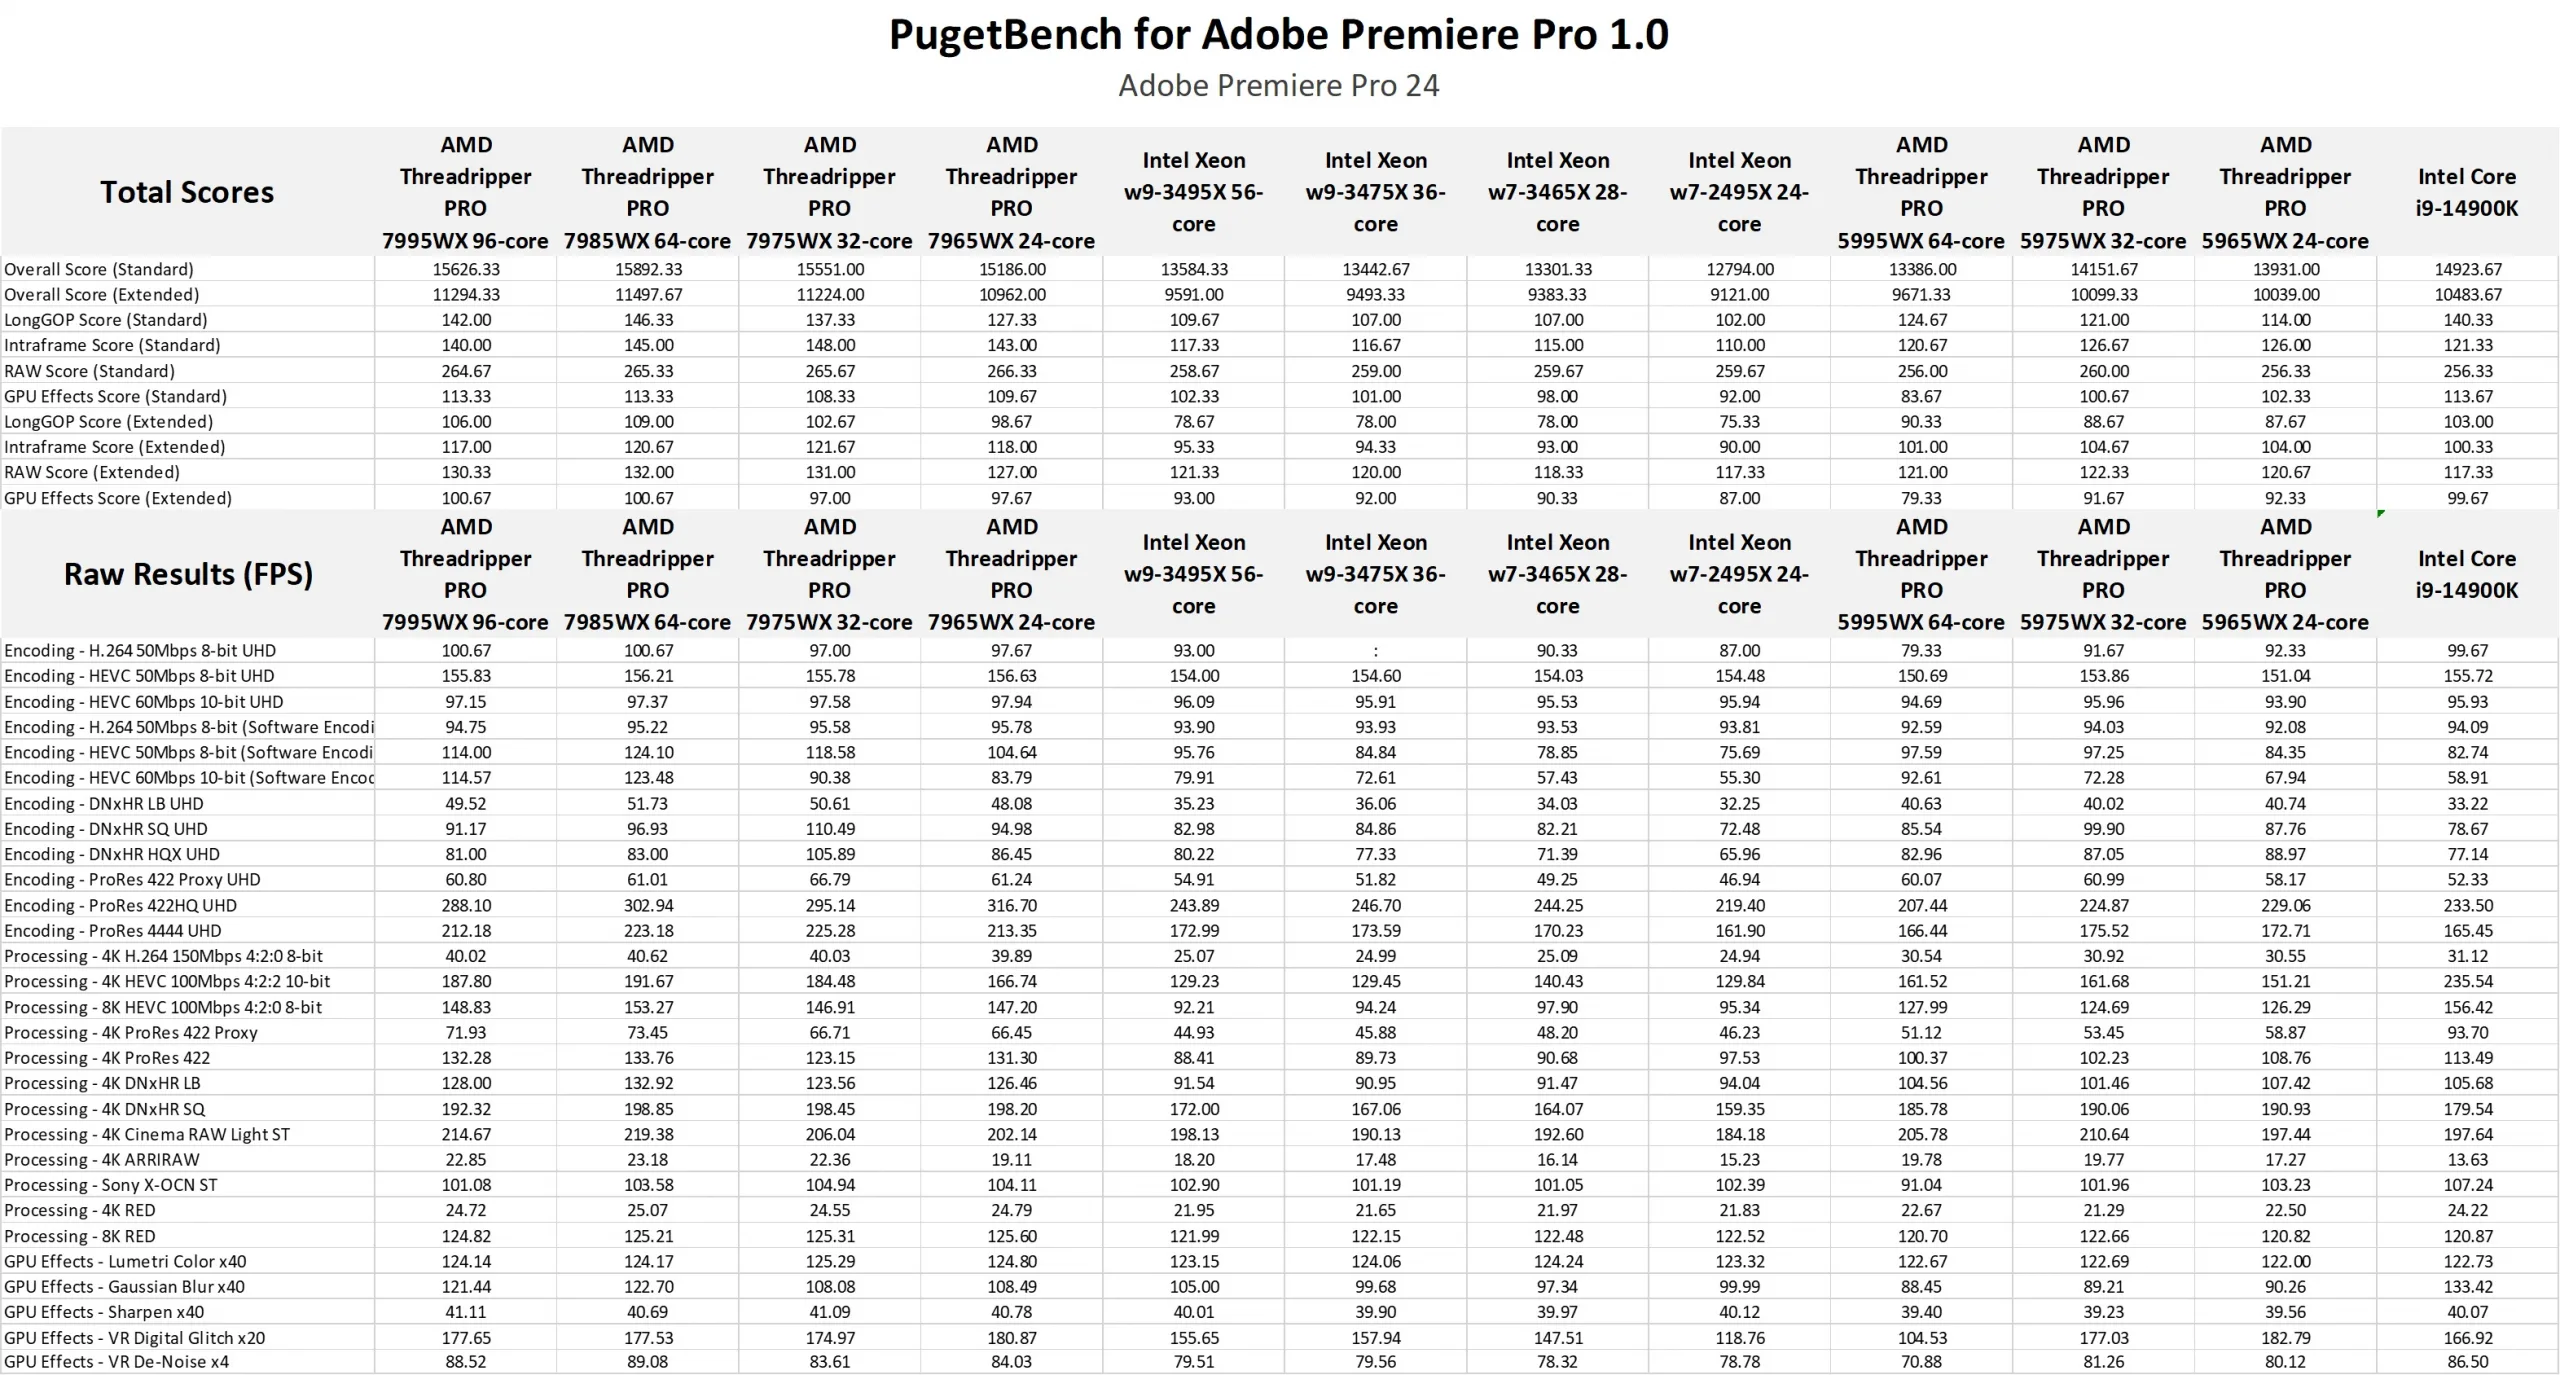 AMD Threadripper PRO 7000 WX-Series Benchmark Data for Premiere Pro